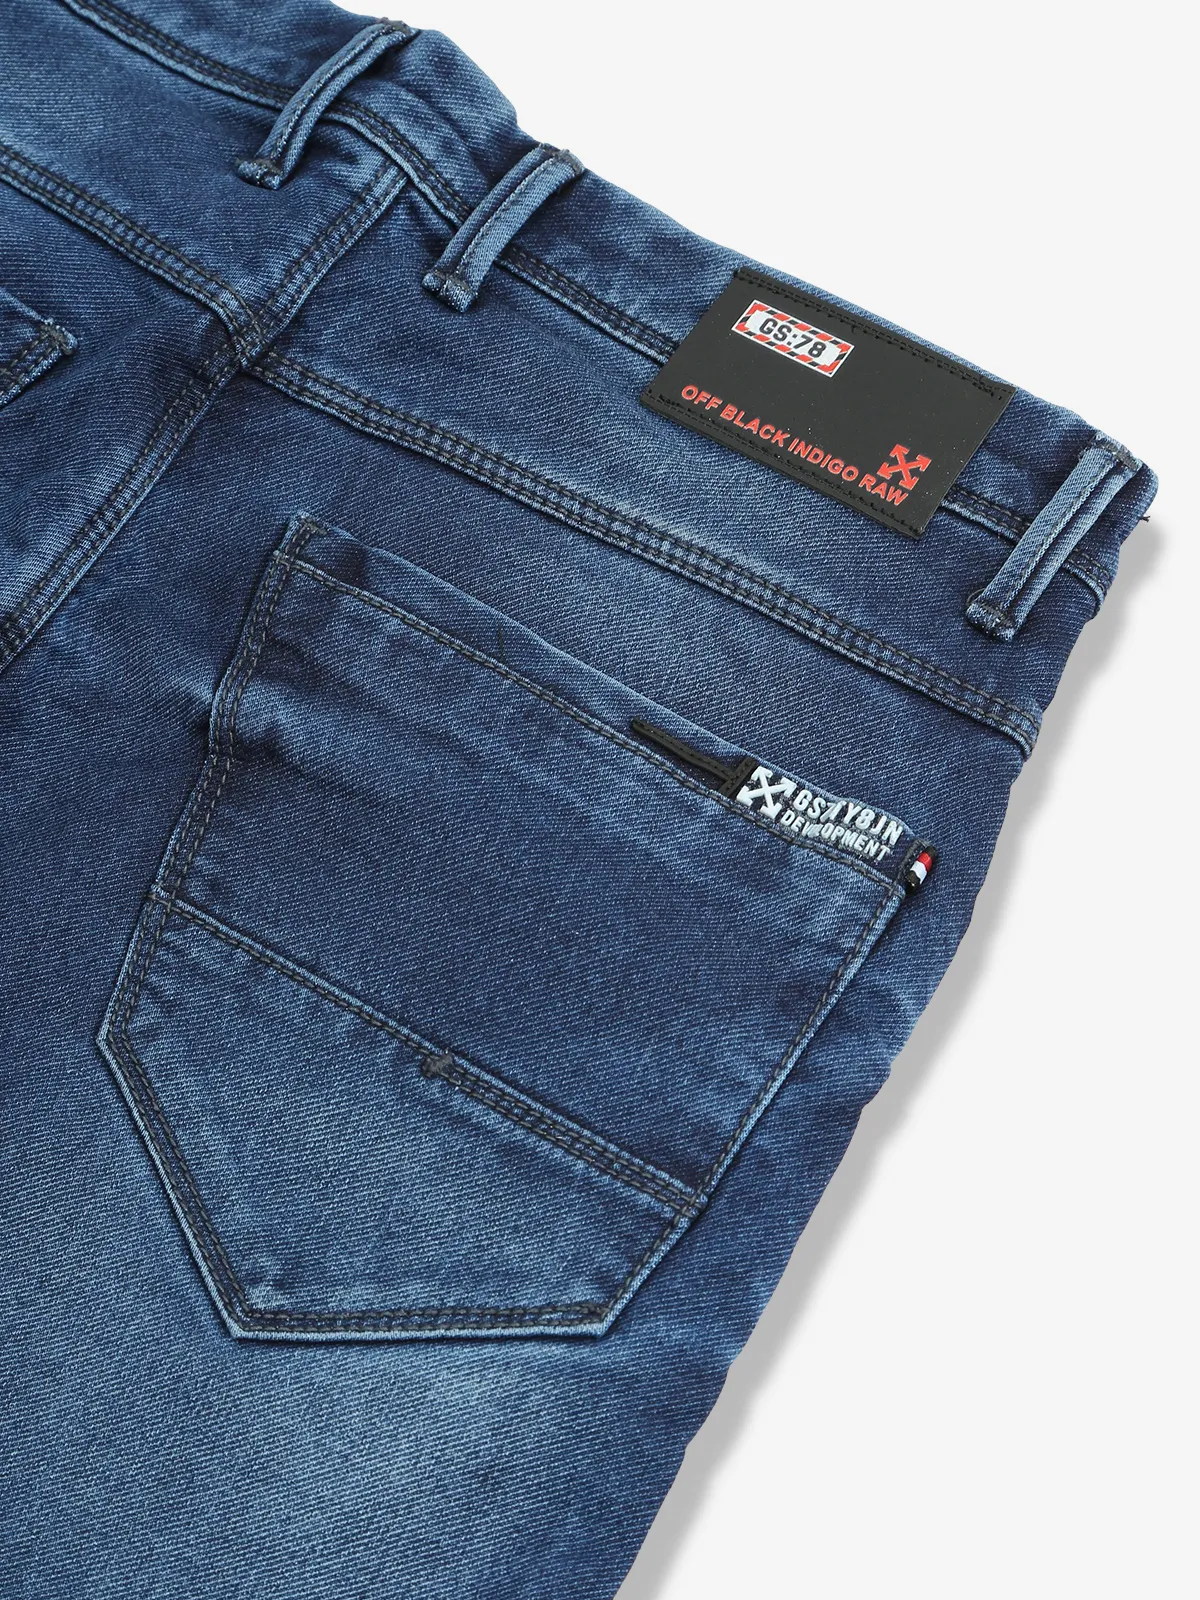 GS78 dark blue denim slim fit jeans